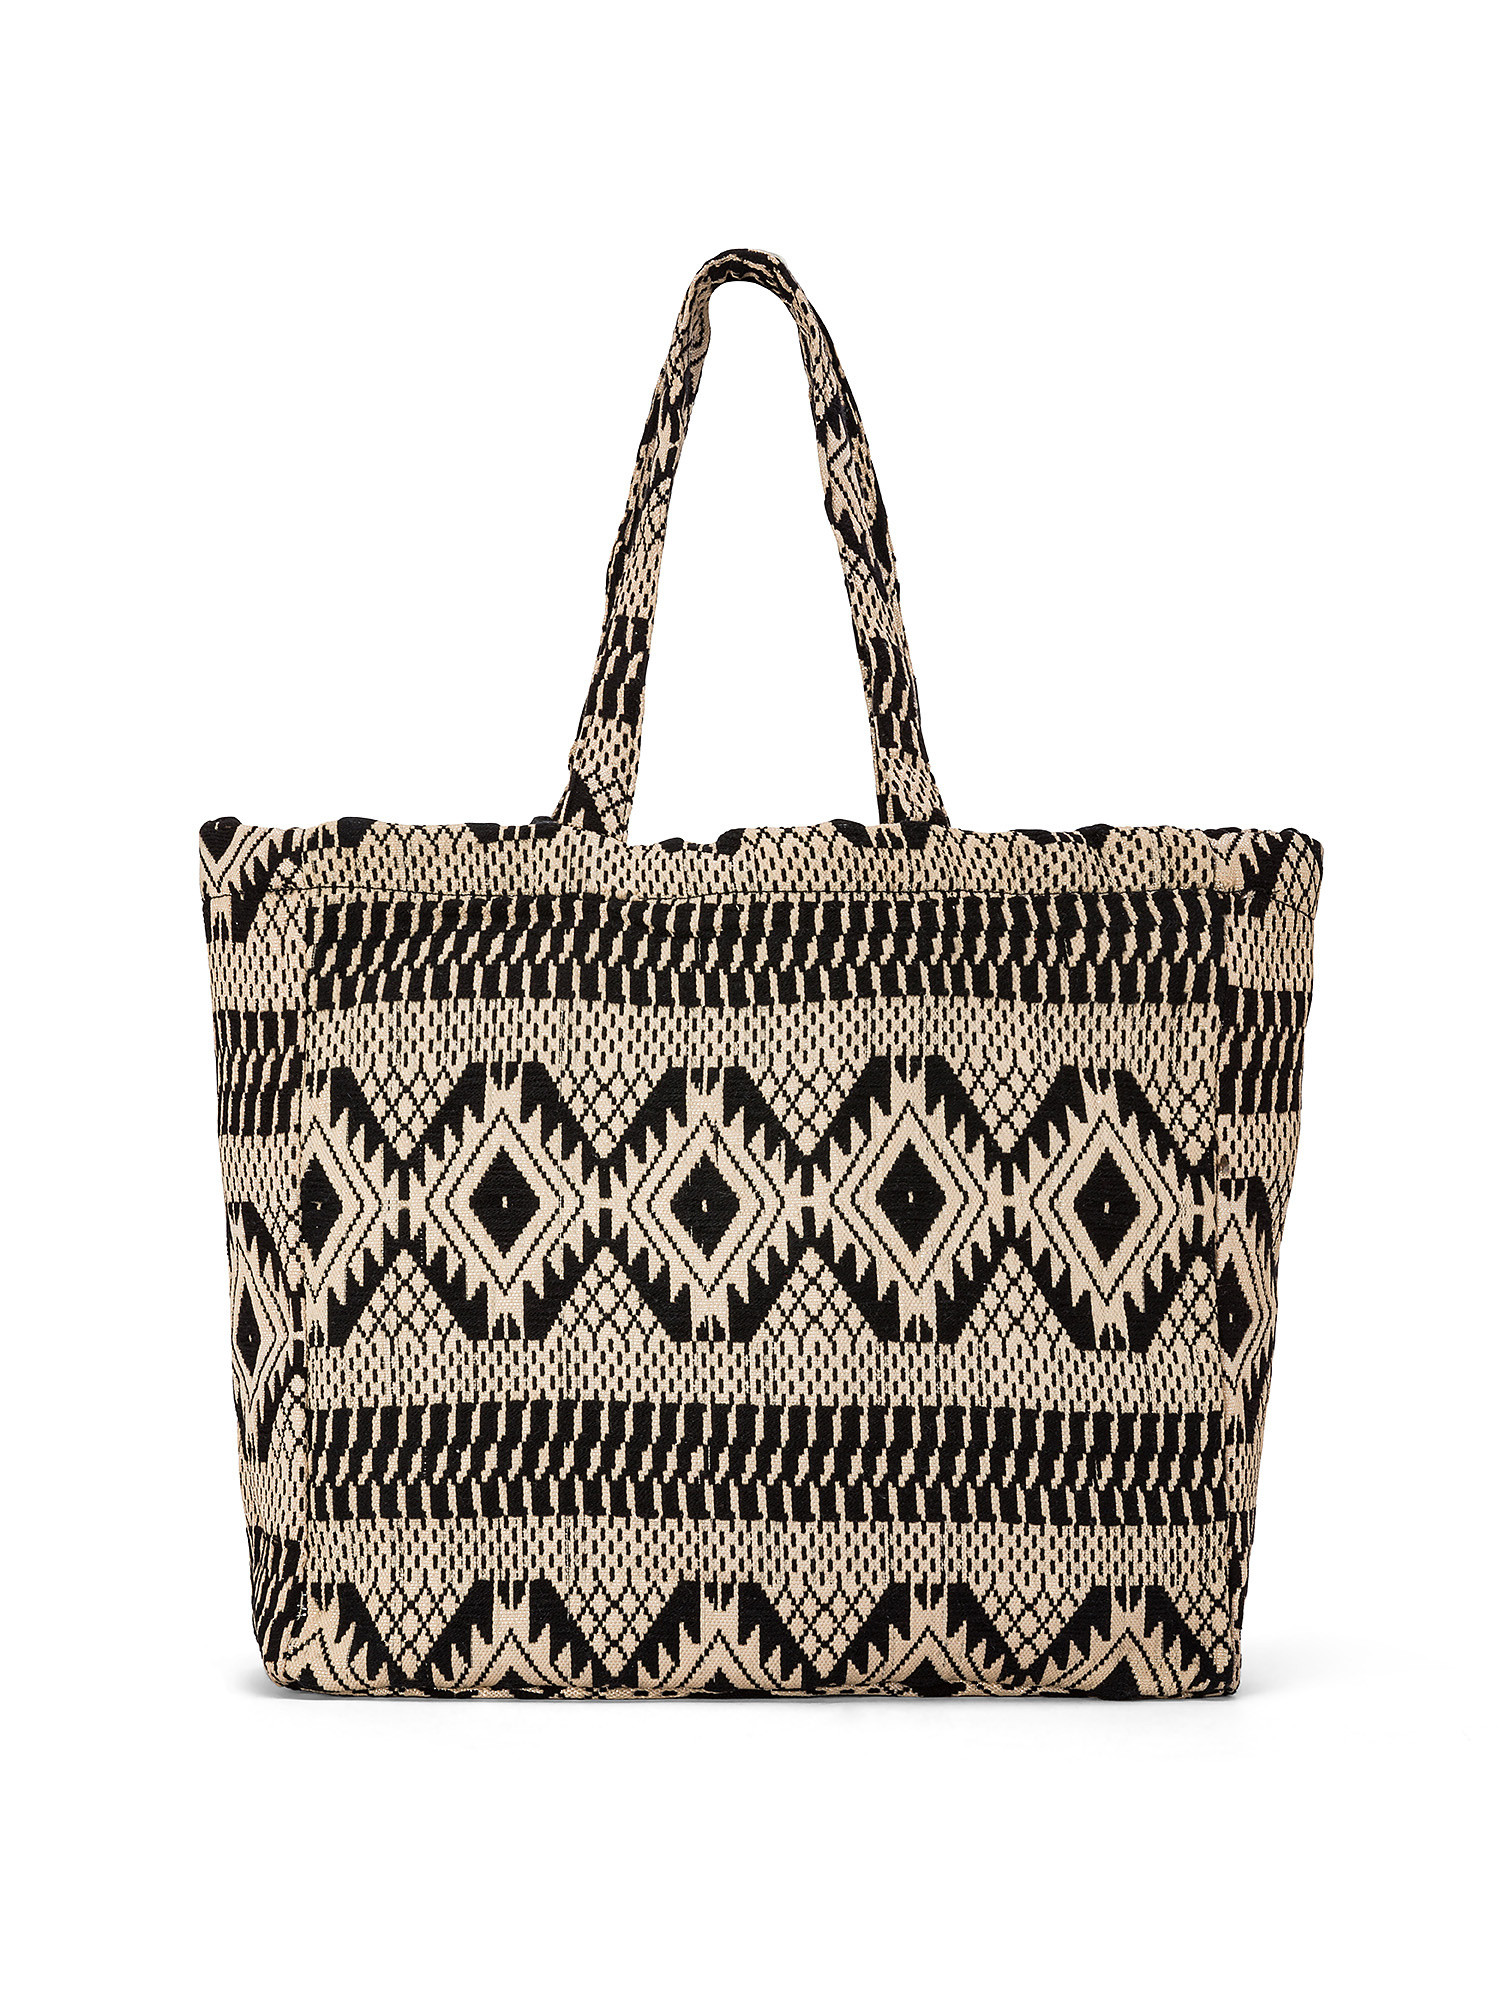 Koan - Patterned shopping bag, Brown, large image number 0